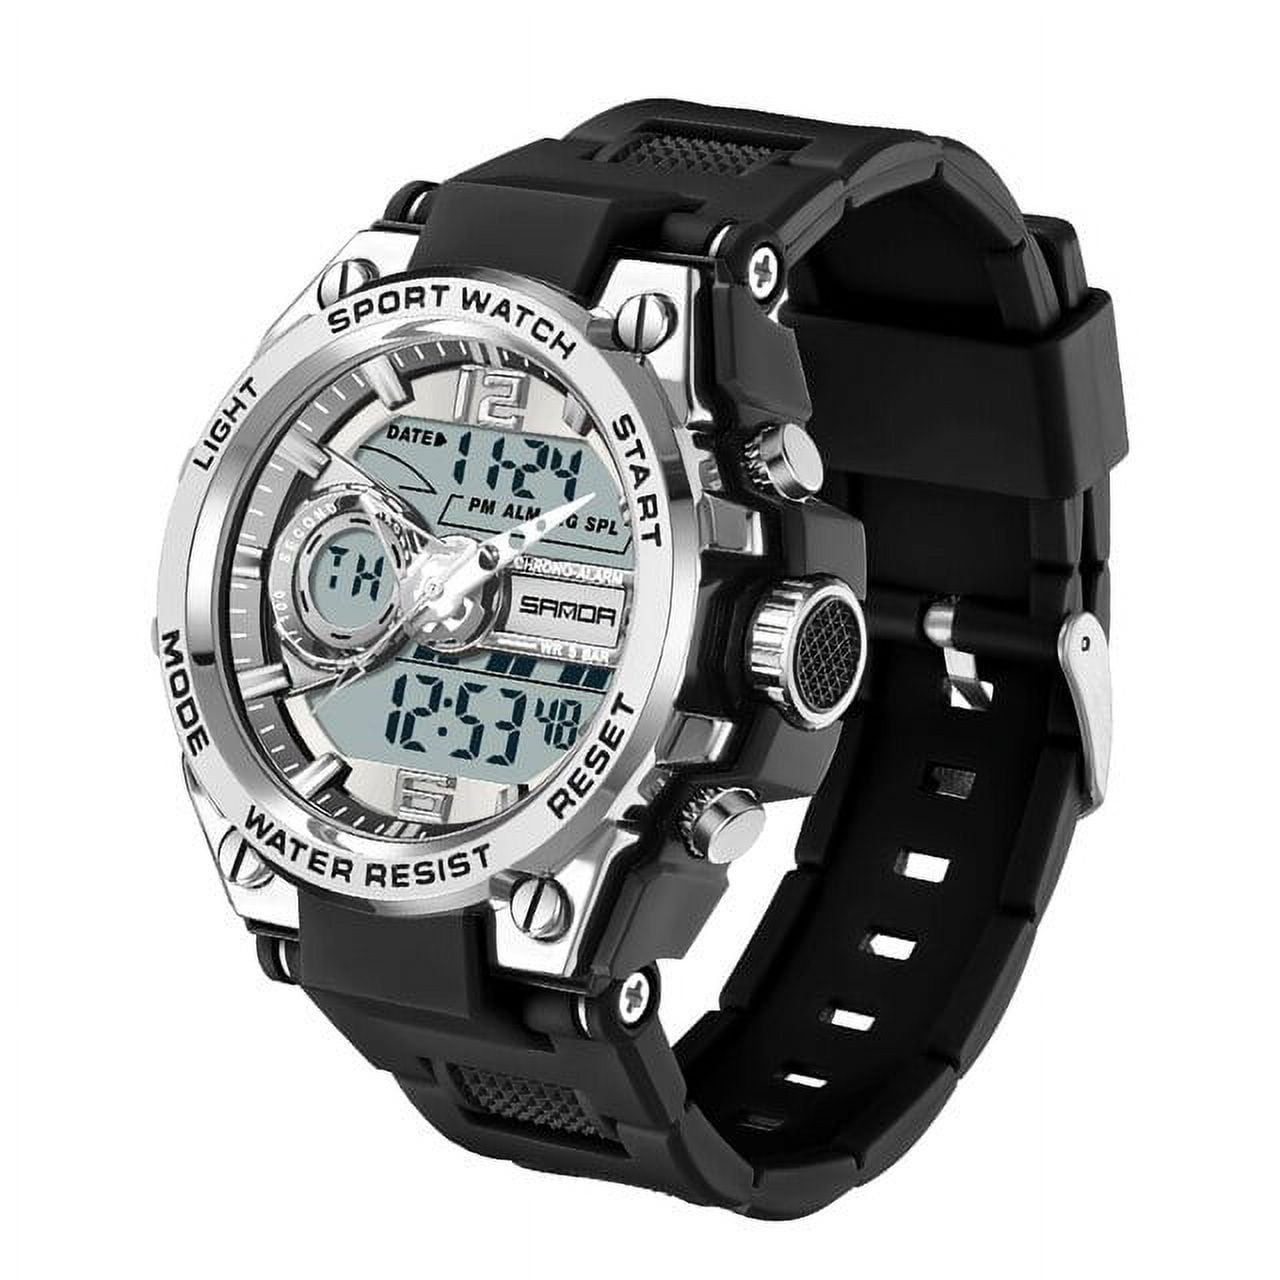 Buy Digital Watch (DW5) - B1G1 Online at Best Price in India on Naaptol.com-gemektower.com.vn